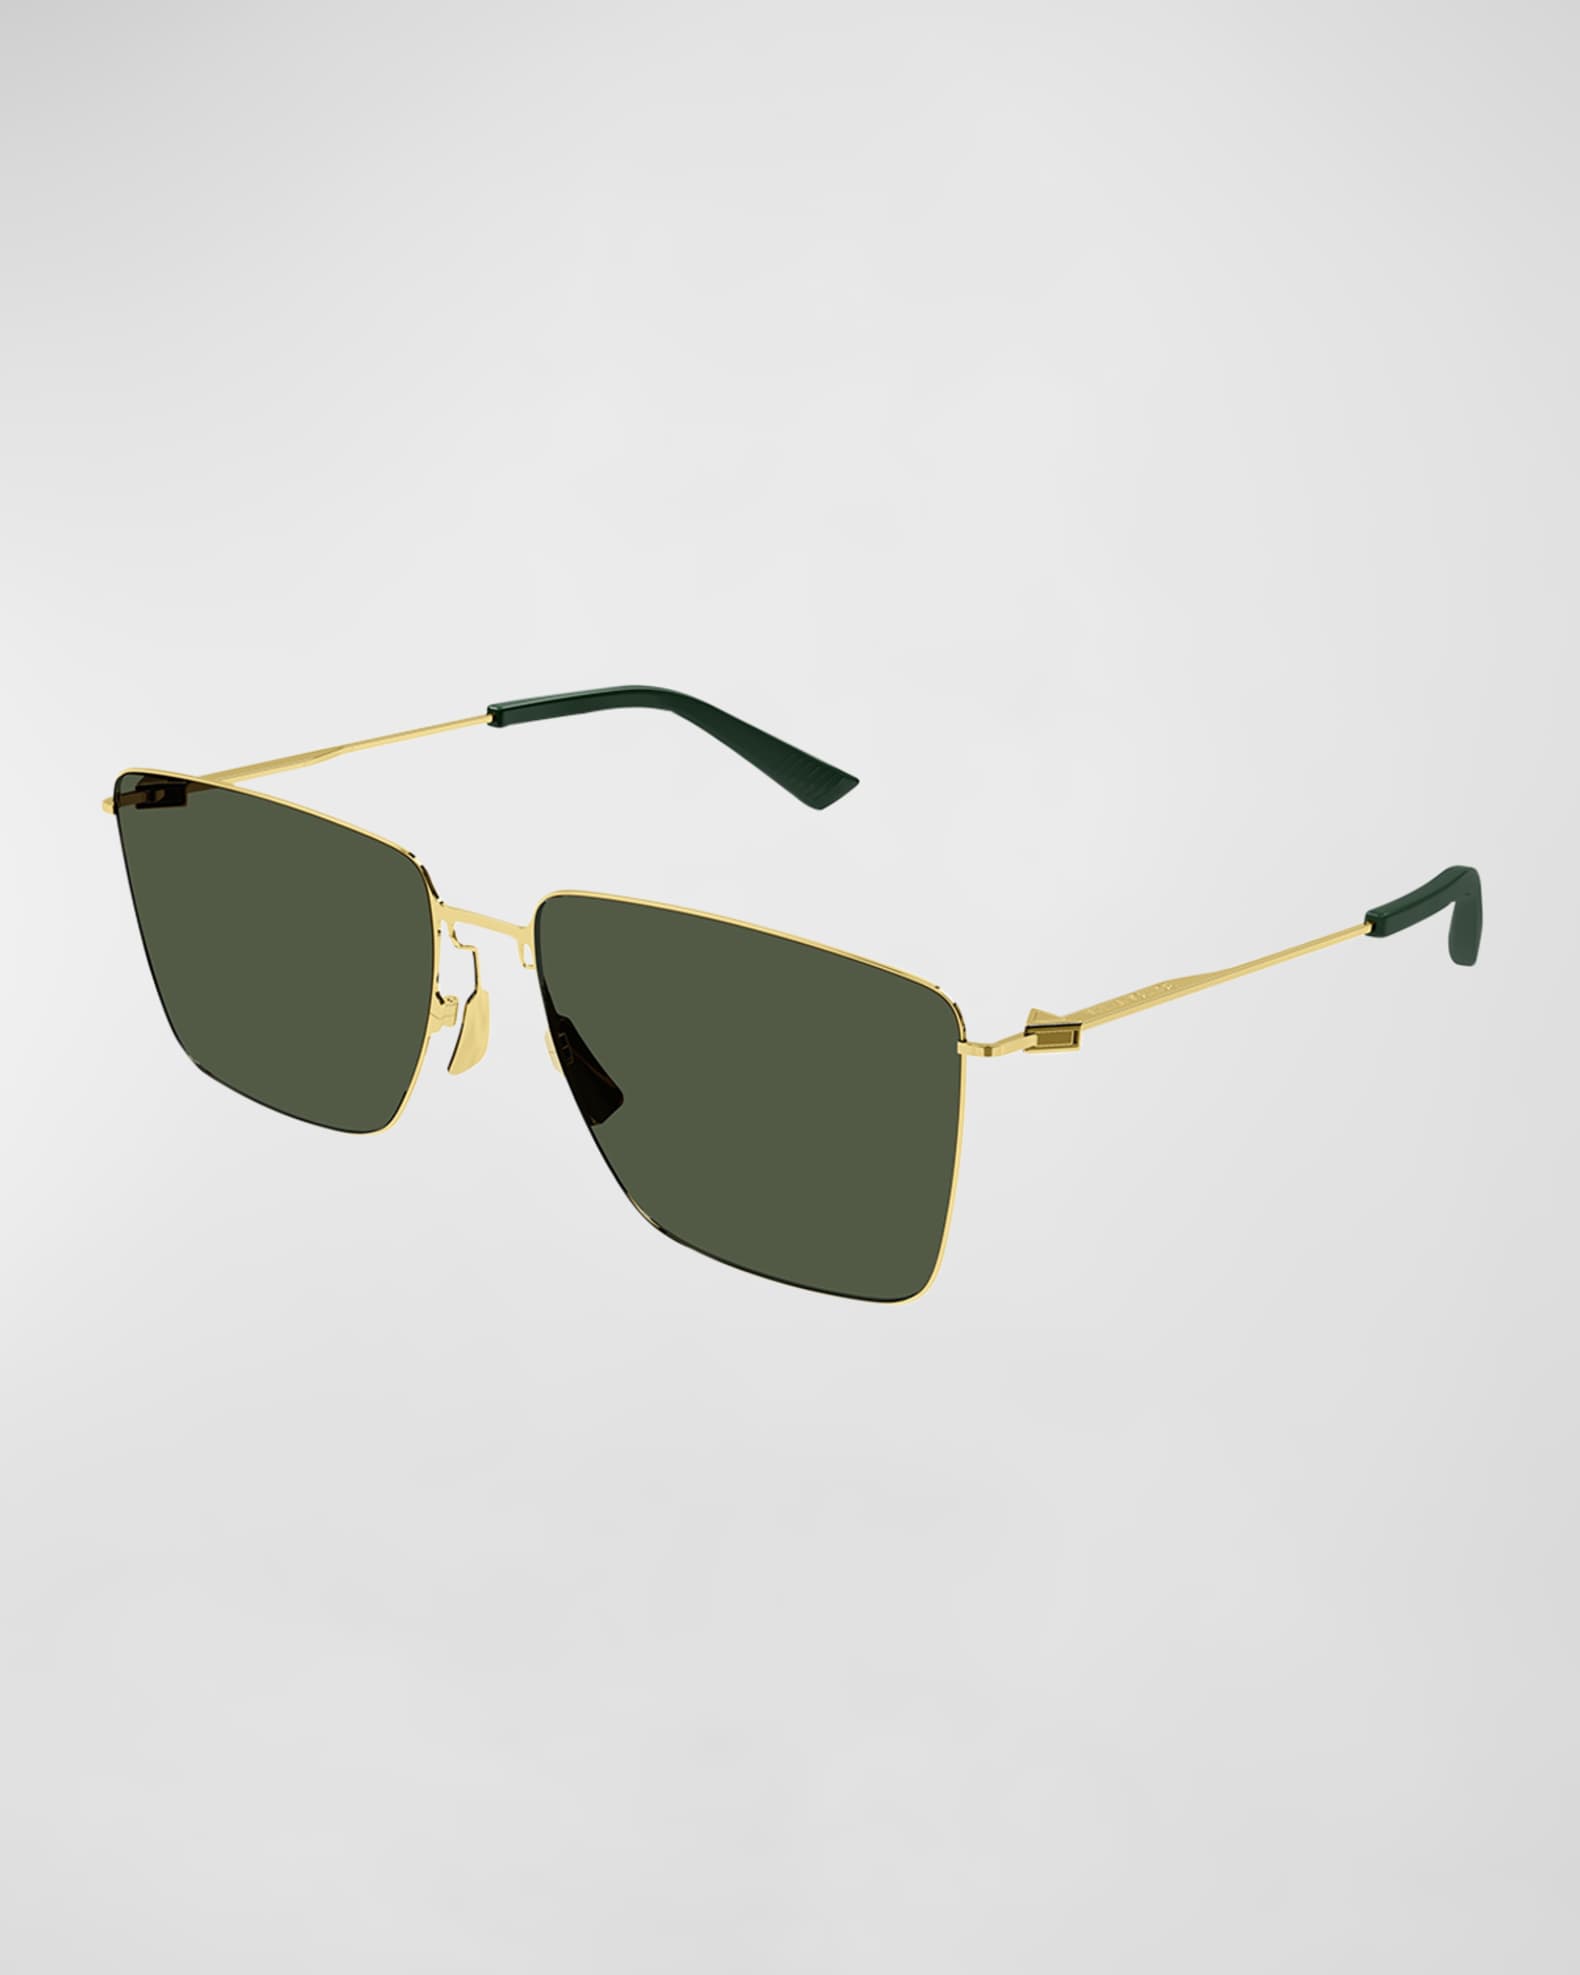 Bottega Veneta Sunglasses Men Metal Green Black